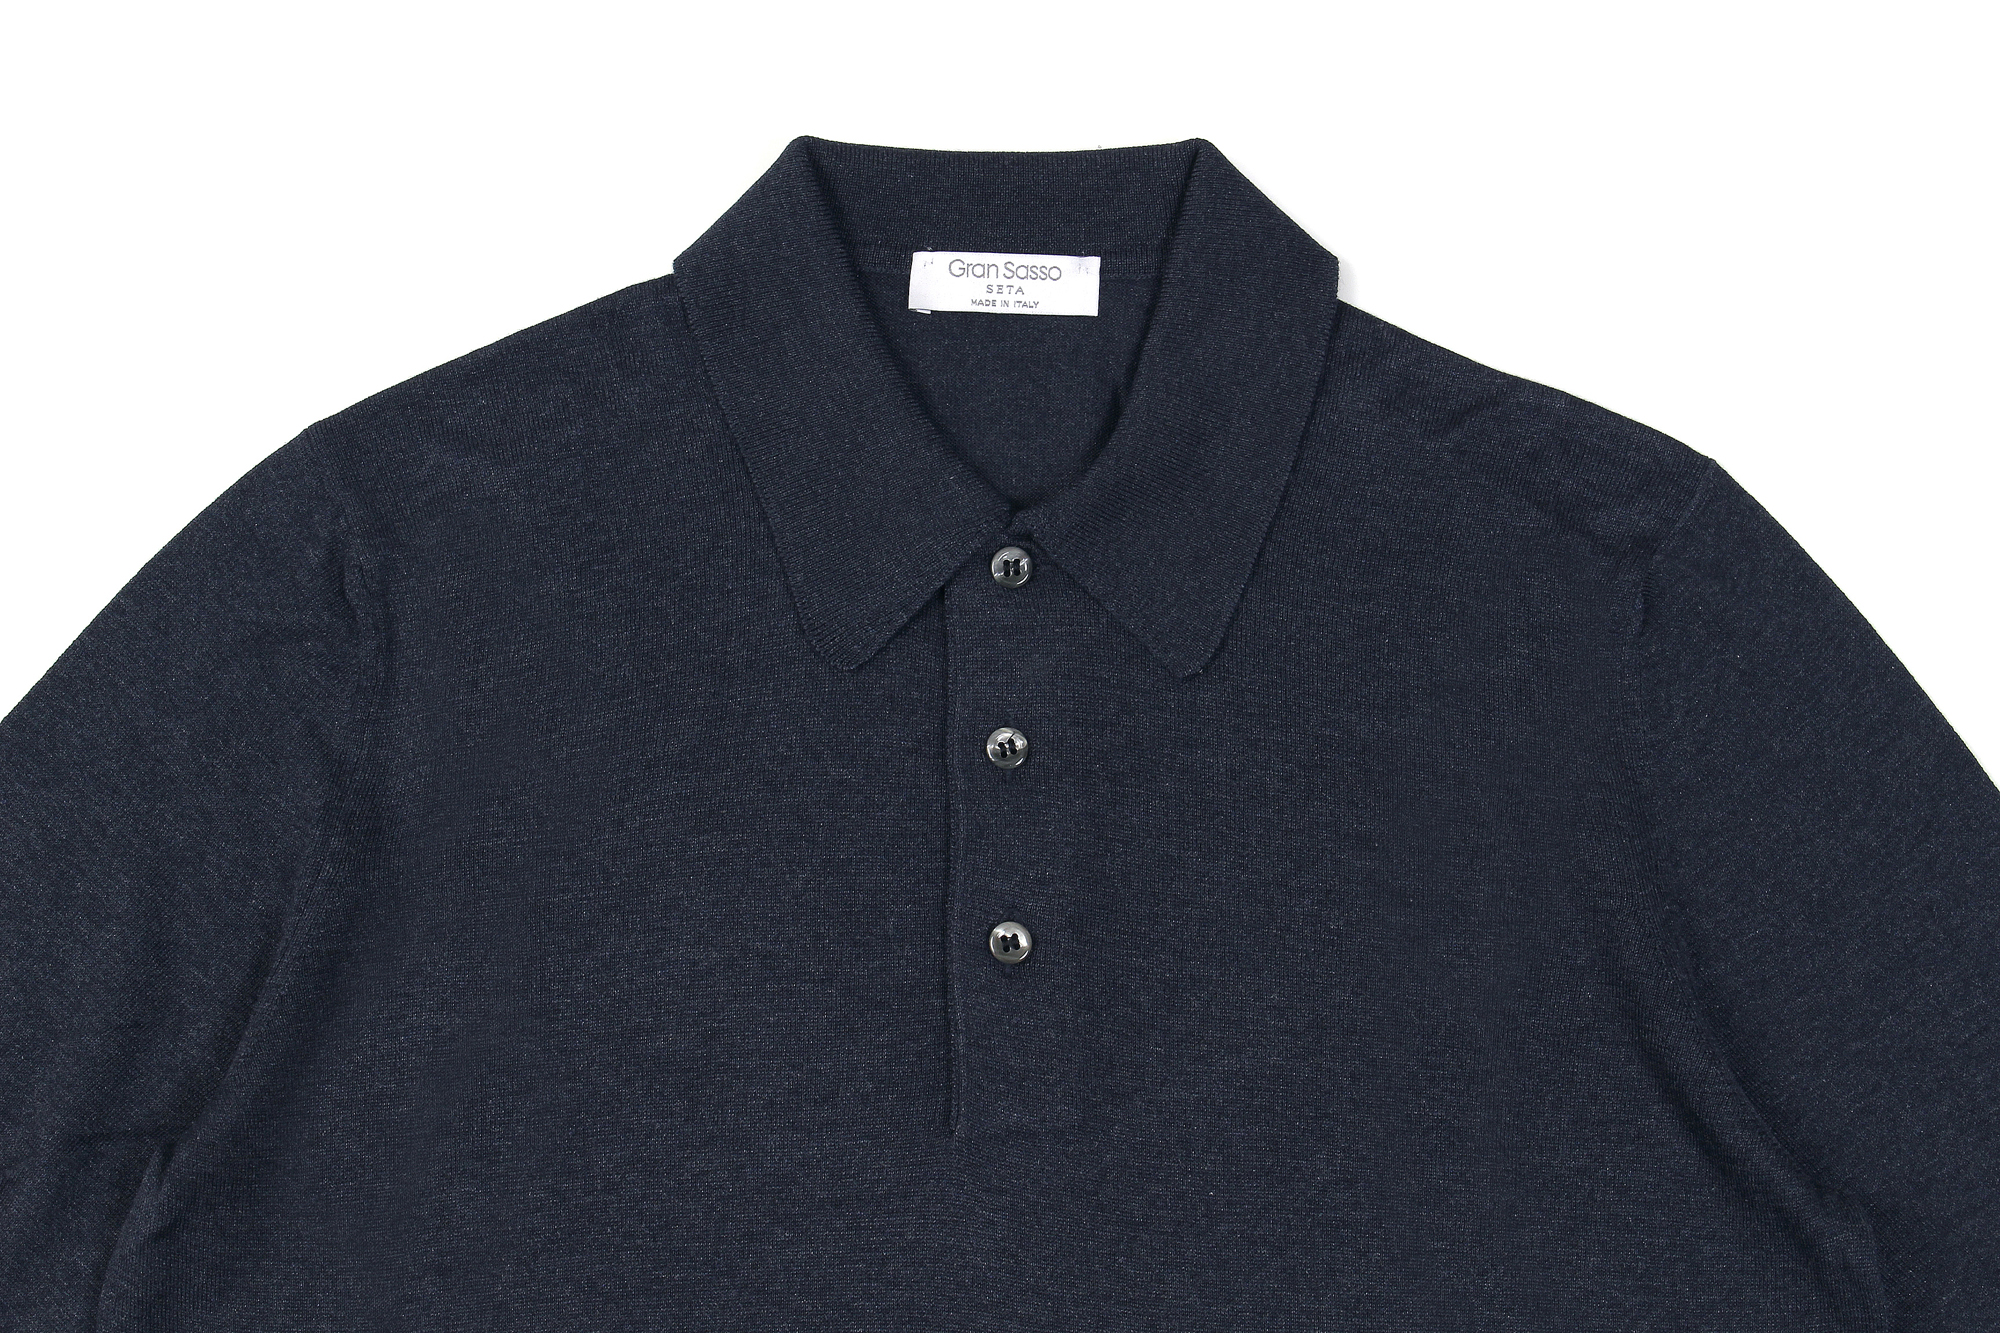 Gran Sasso (グランサッソ) Silk Knit Polo Shirt (シルクニットポロシャツ) SETA (シルク 100%) シルク ニット ポロシャツ NAVY (ネイビー・597) made in italy (イタリア製) 2020 春夏新作 【入荷しました】【フリー分発売開始】 愛知 名古屋 altoediritto アルトエデリット